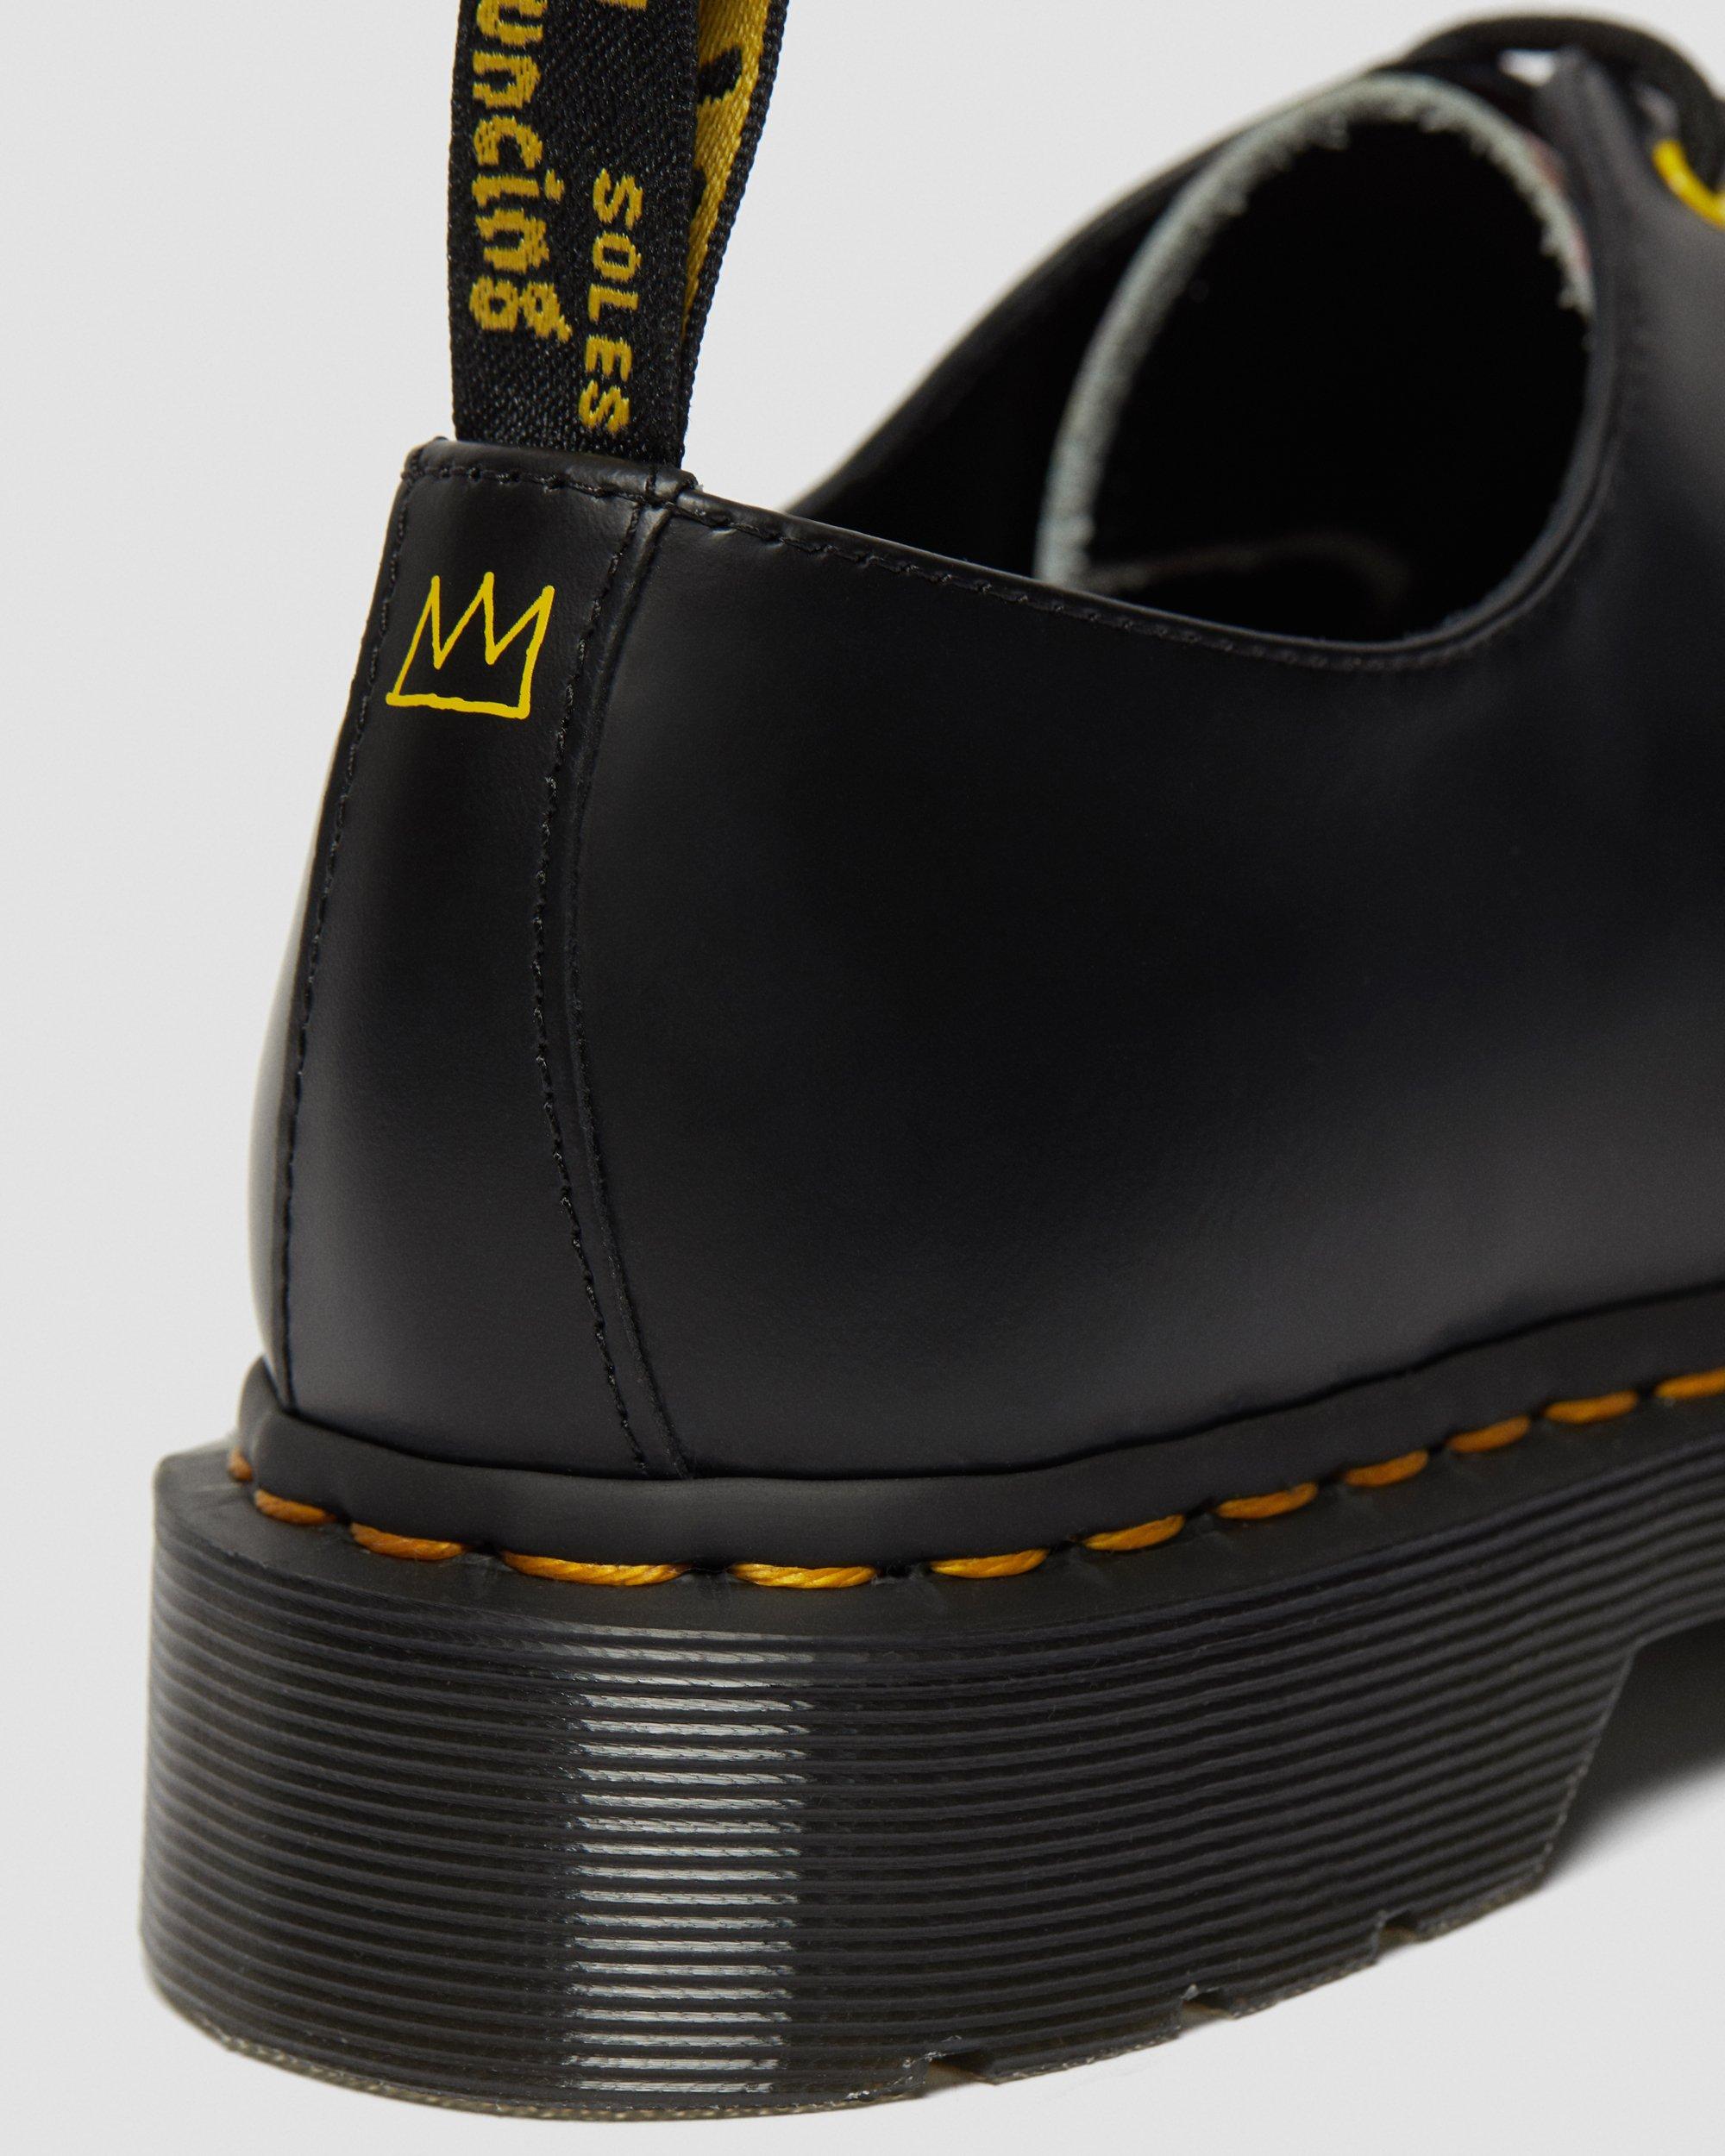 1461 Basquiat Leather Oxford Shoes | Dr. Martens